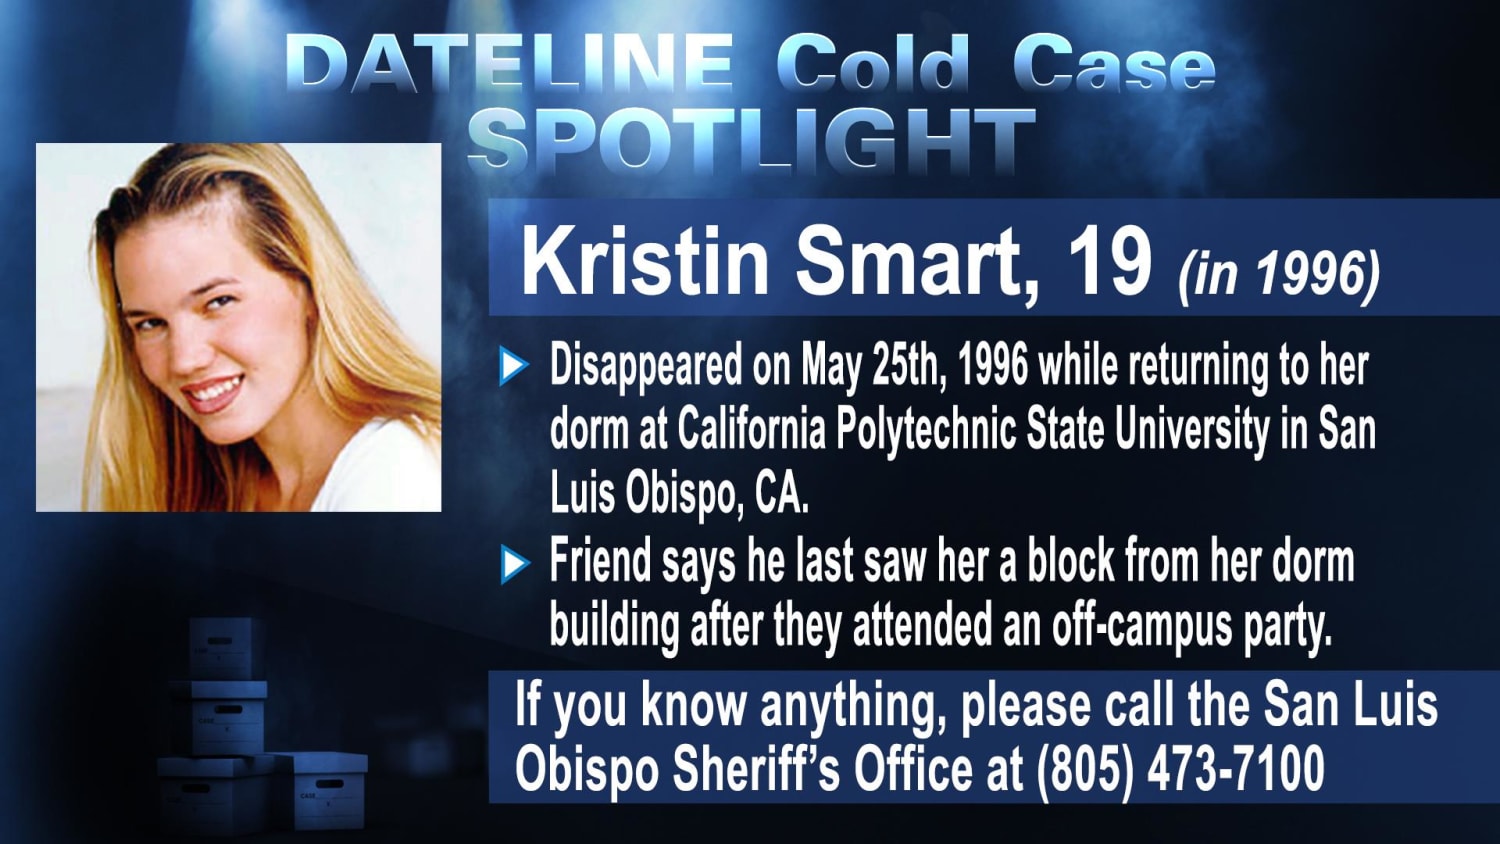 COLD CASE SPOTLIGHT: Kristin Smart - NBC News1920 x 1080